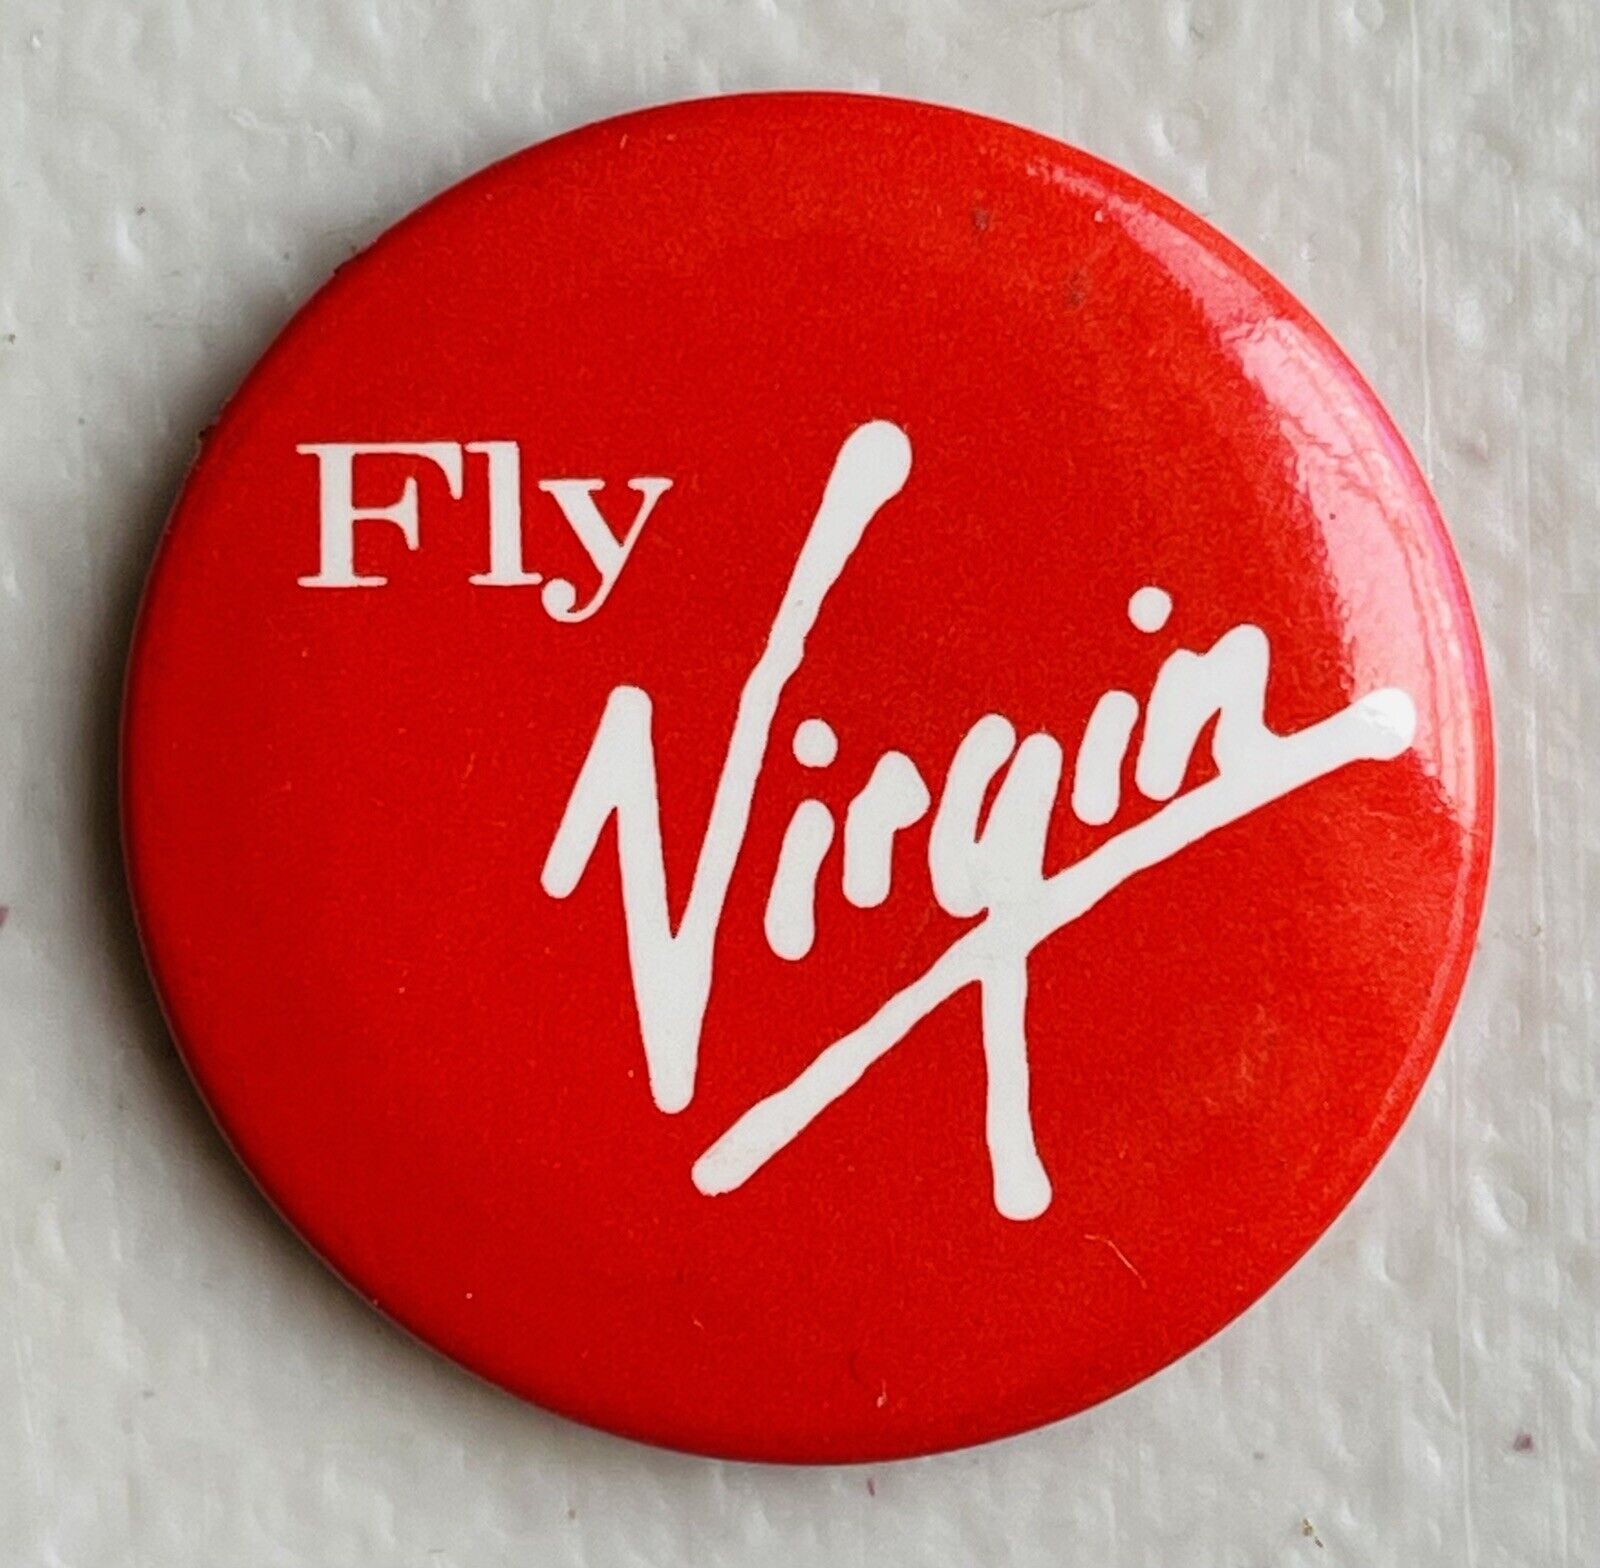 Virgin Atlantic Airlines  Pin - Back Button  - Fly Virgin